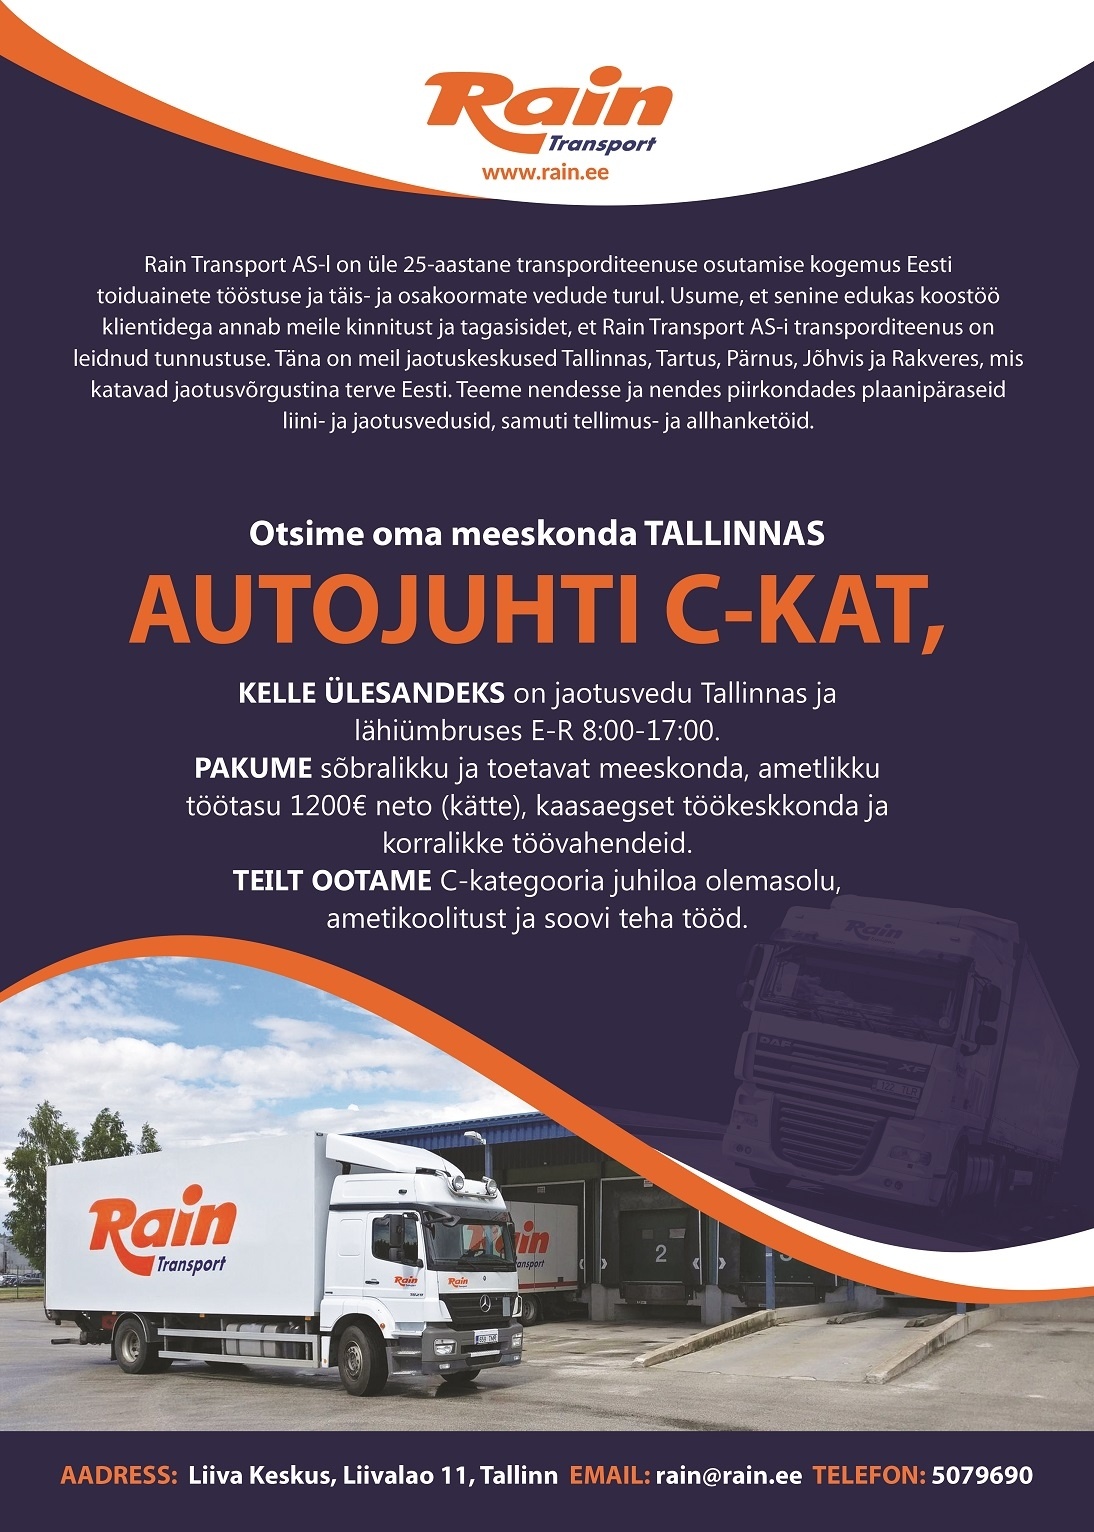 Rain Transport AS Autojuht C-kat